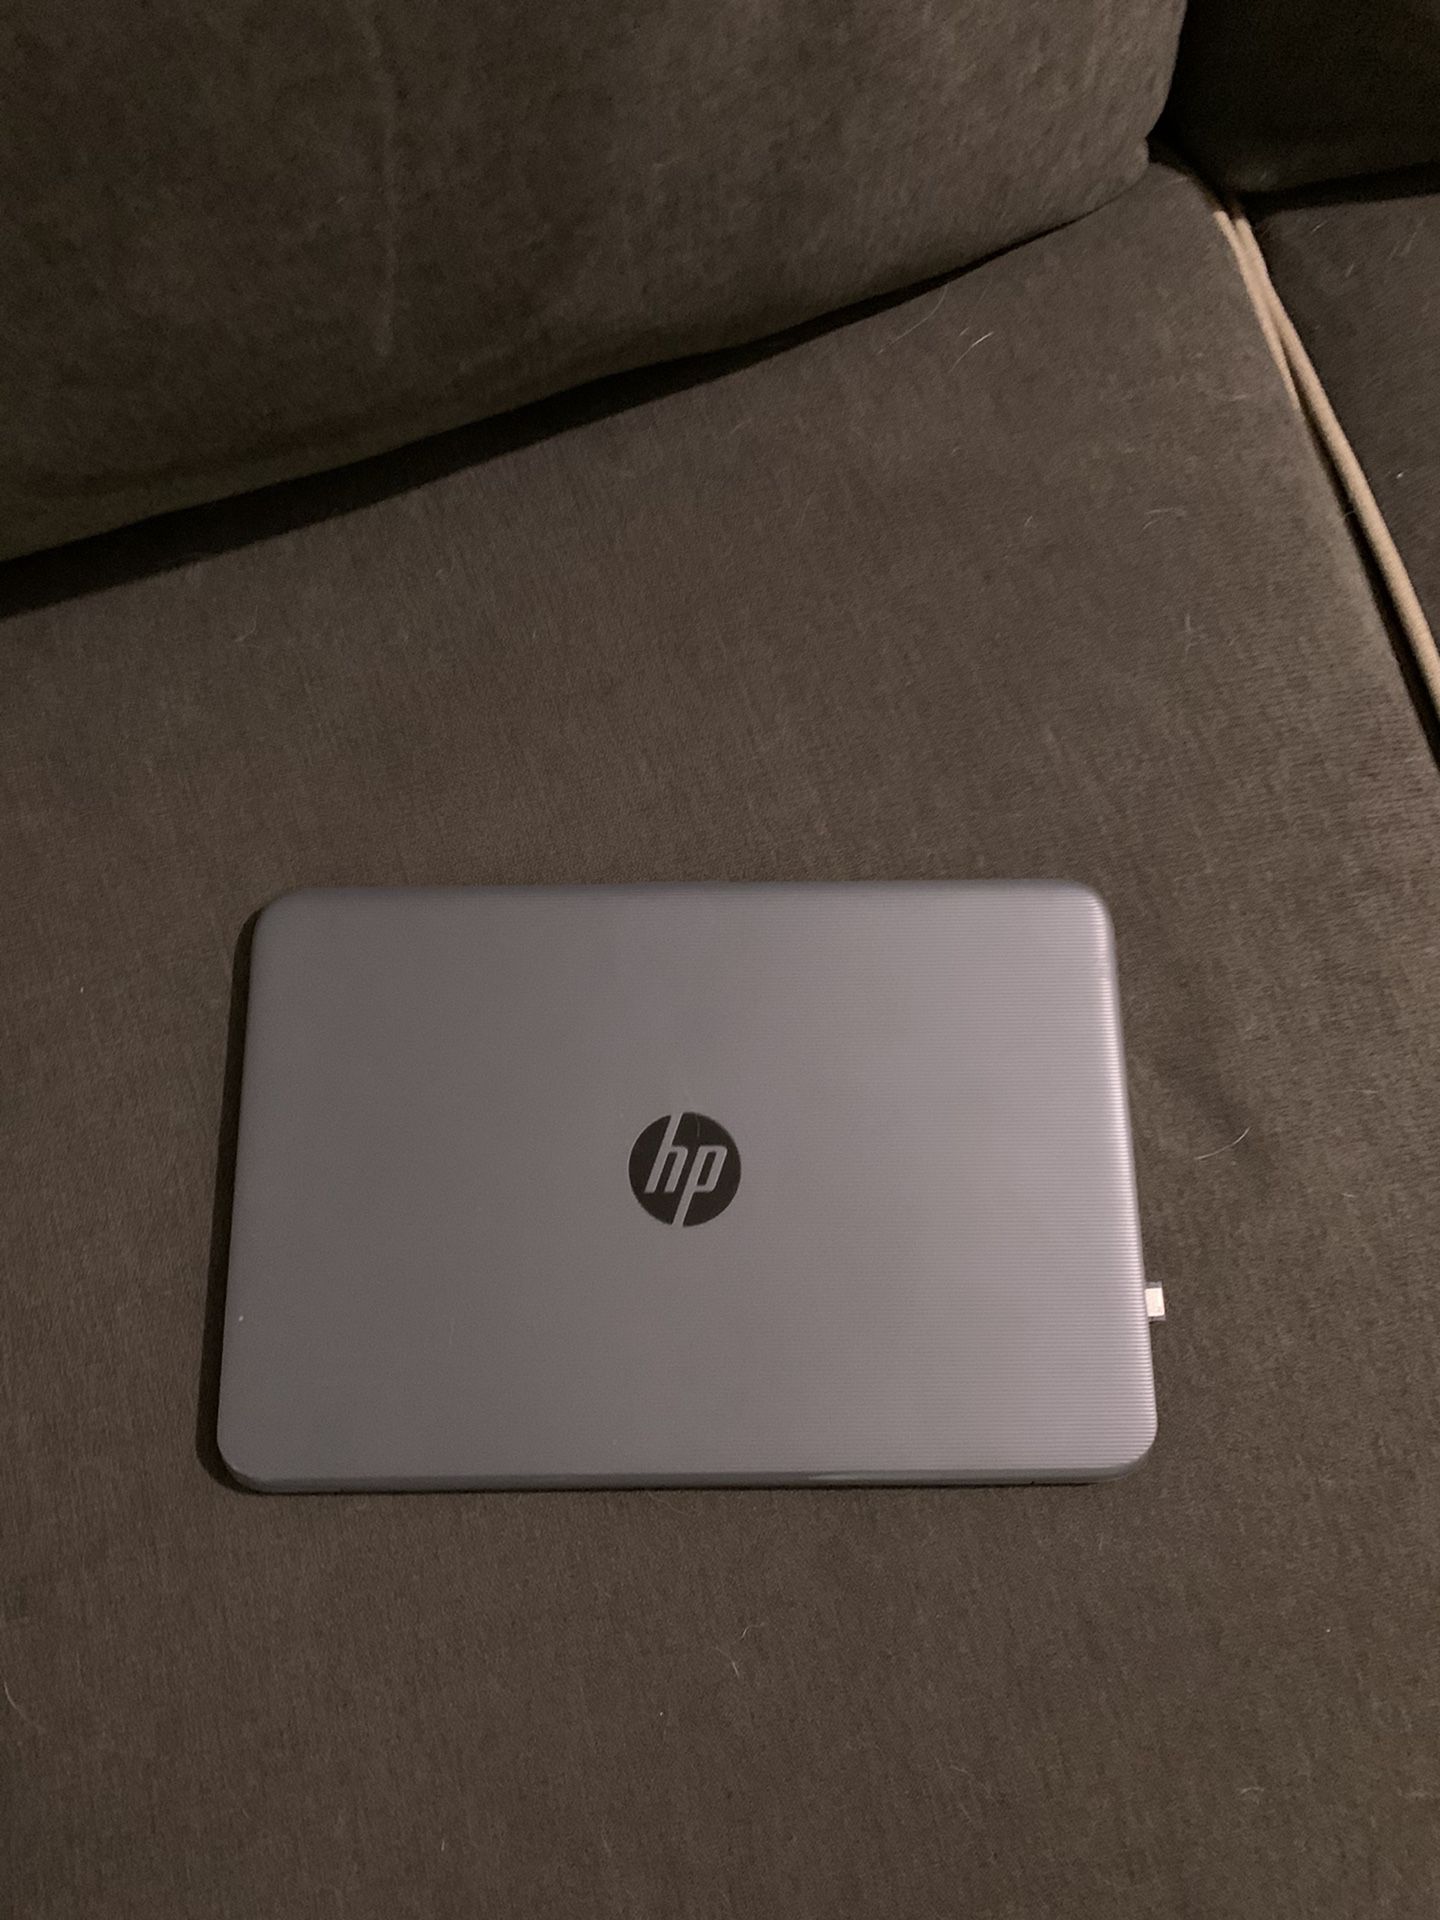 HP laptop computer